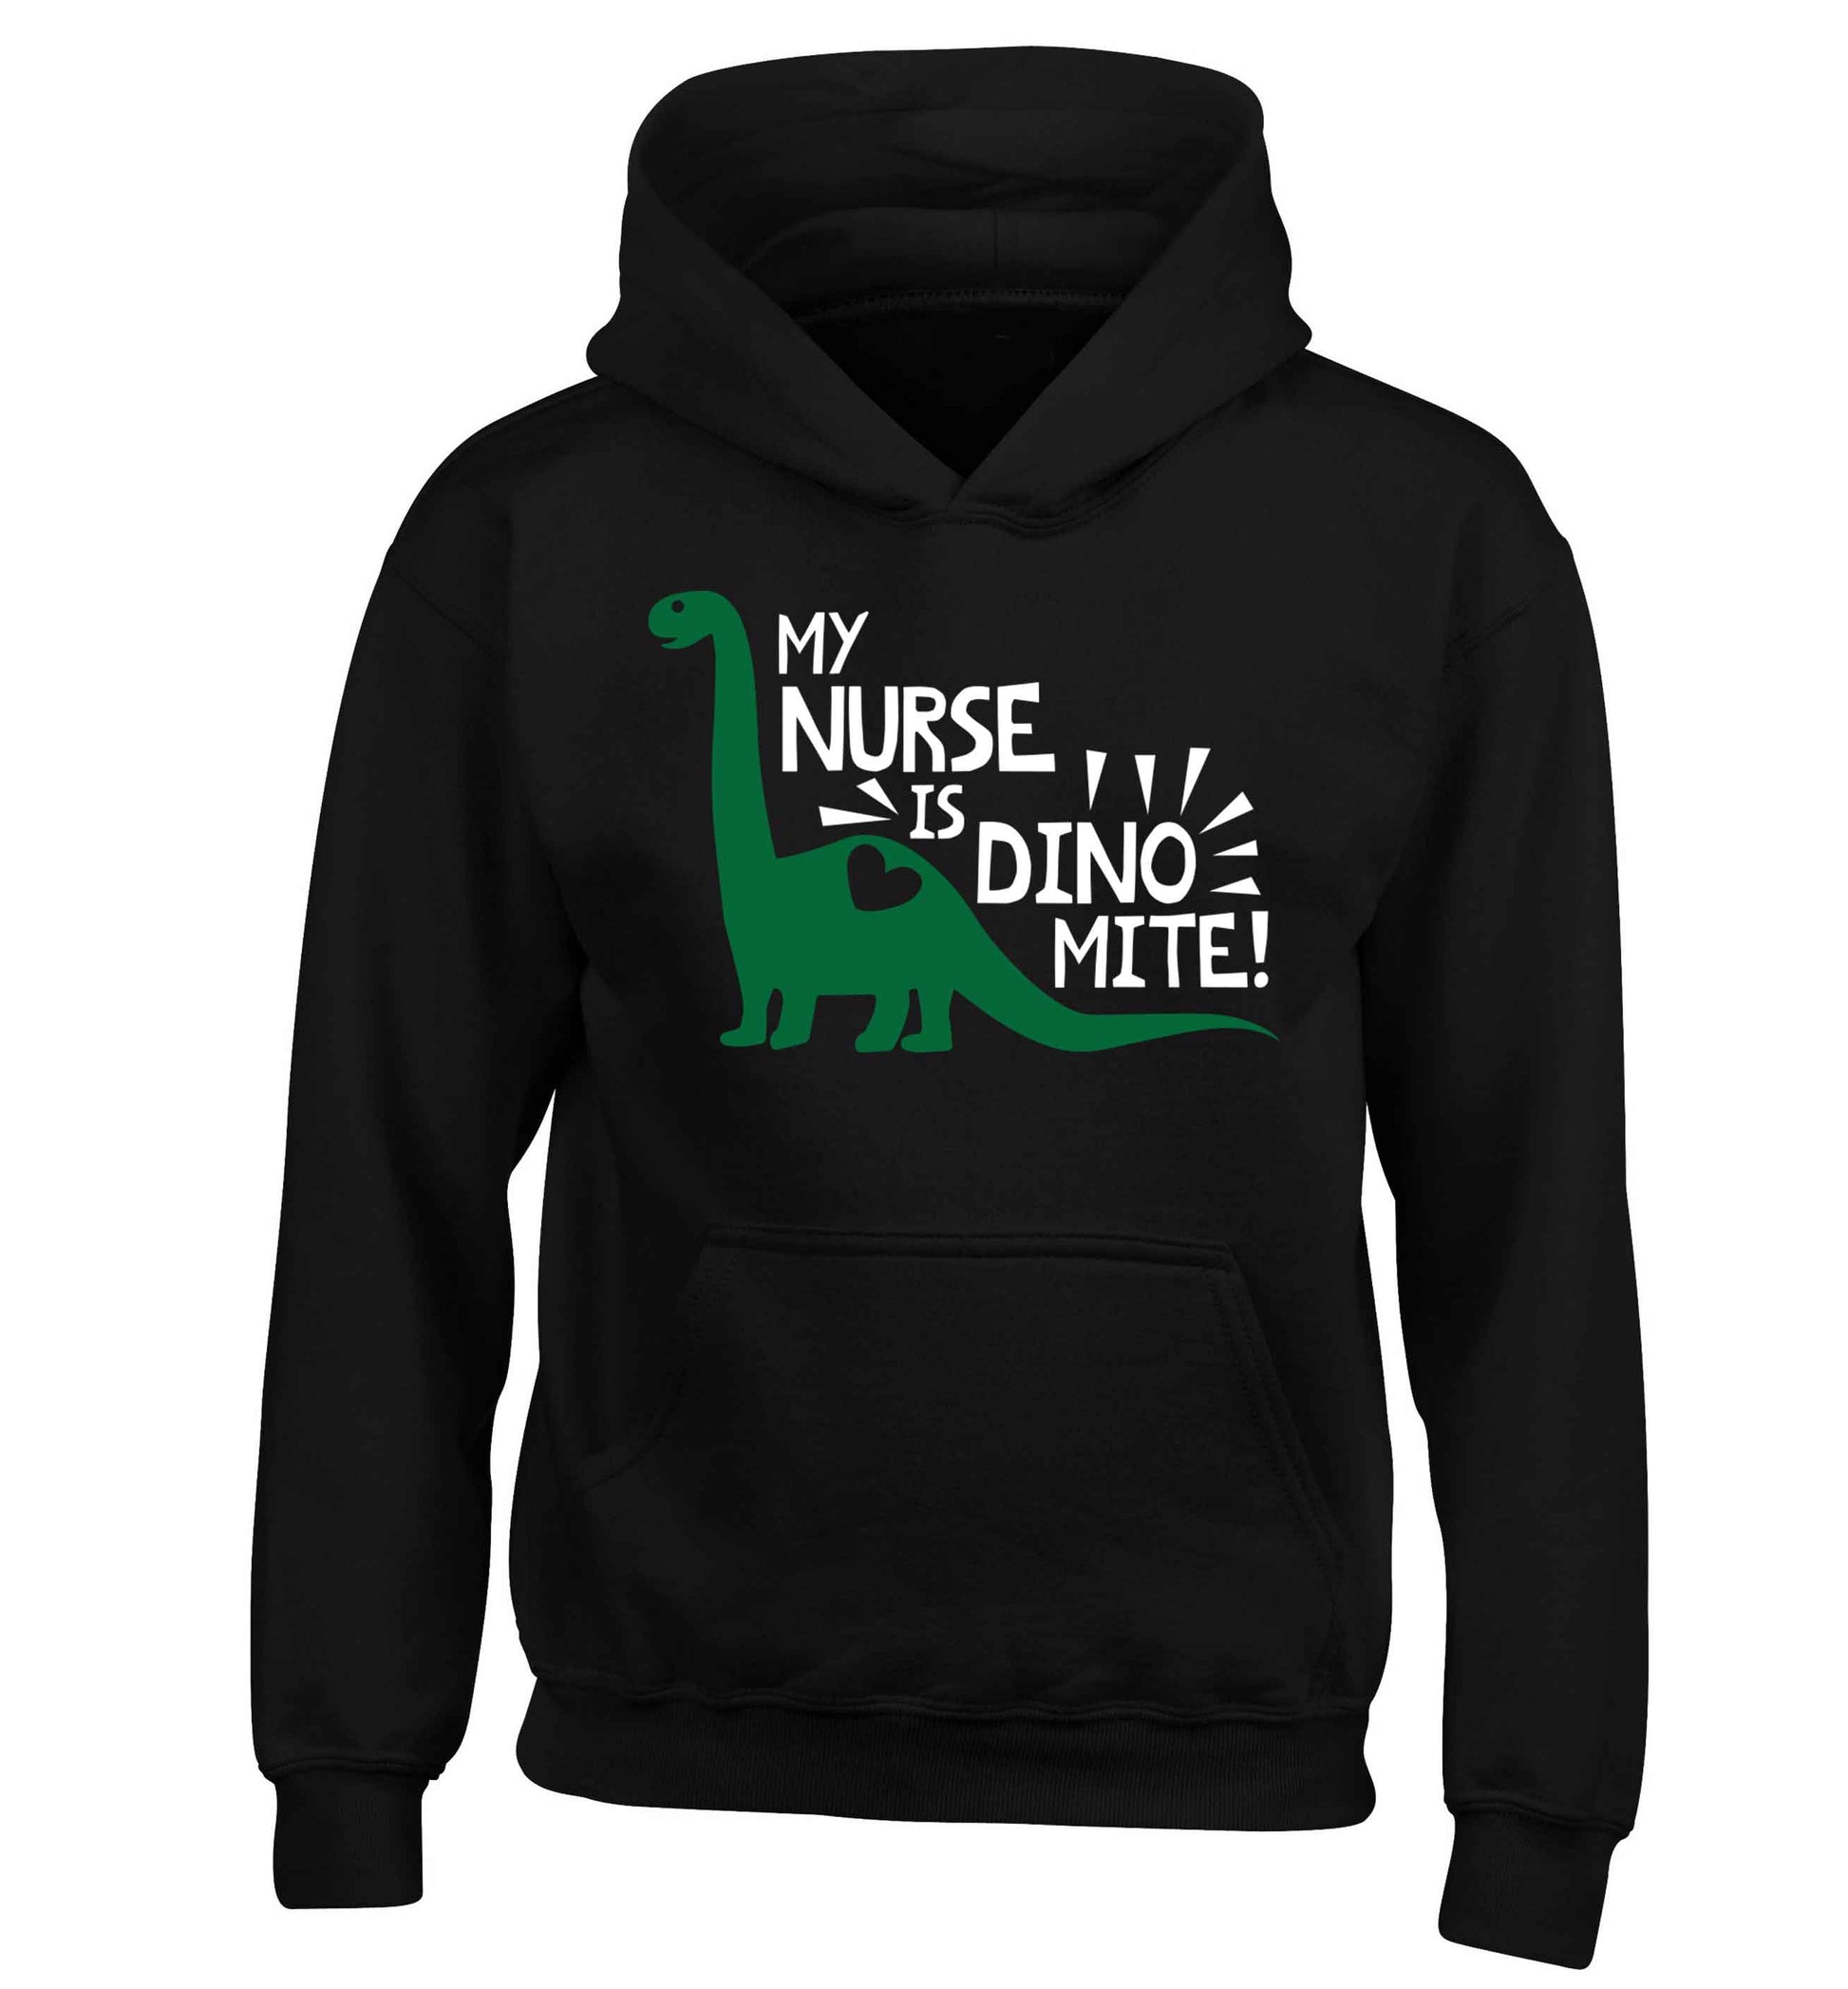 My nurse is dinomite! children's black hoodie 12-13 Years